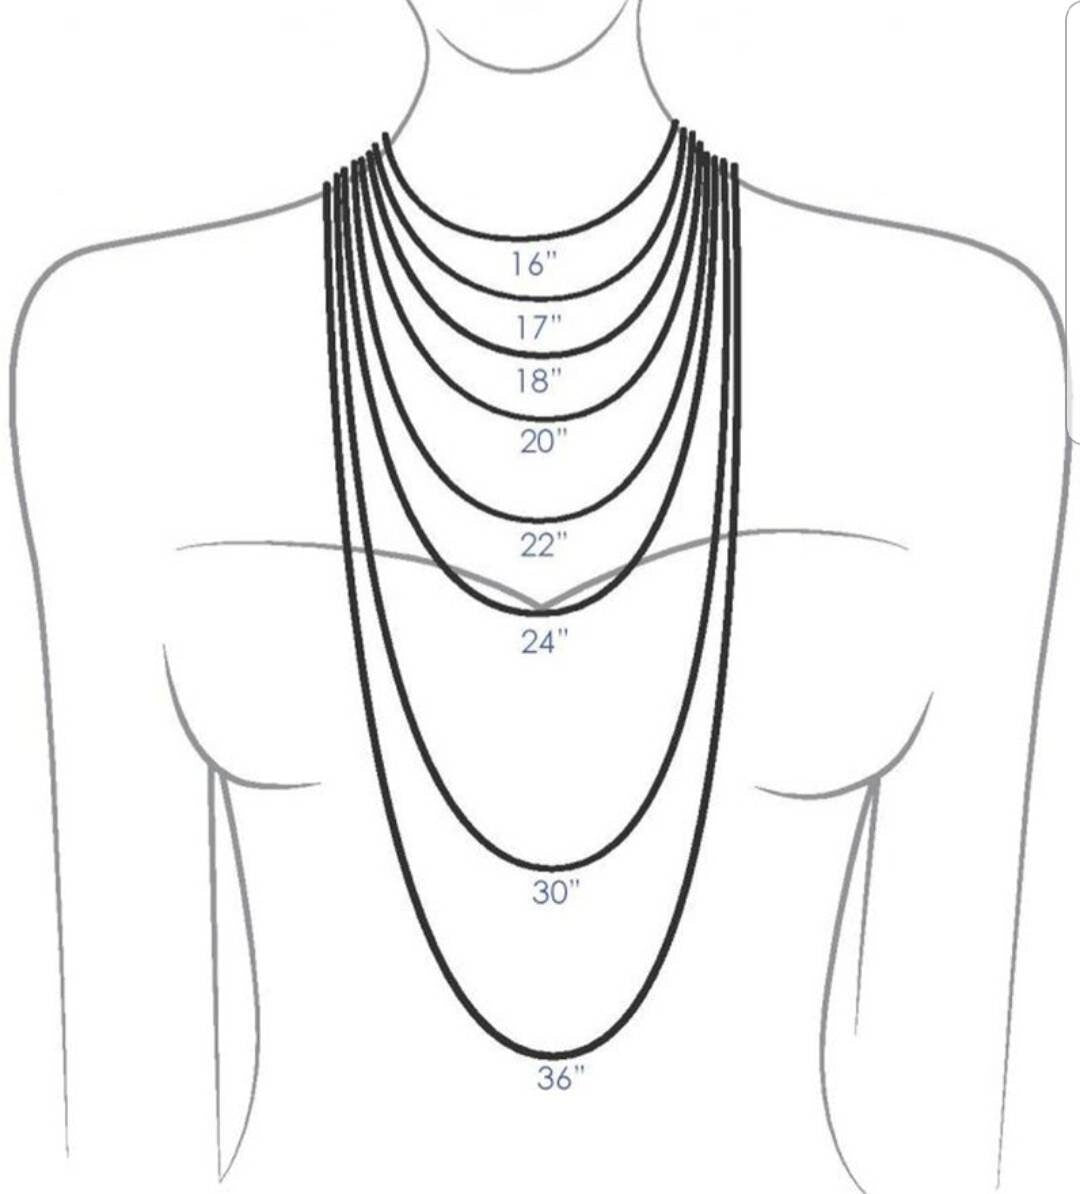 Grossular Garnet Necklace, Silver Wire Wrapped Garnet Pendant, Crystal Healing Jewelry